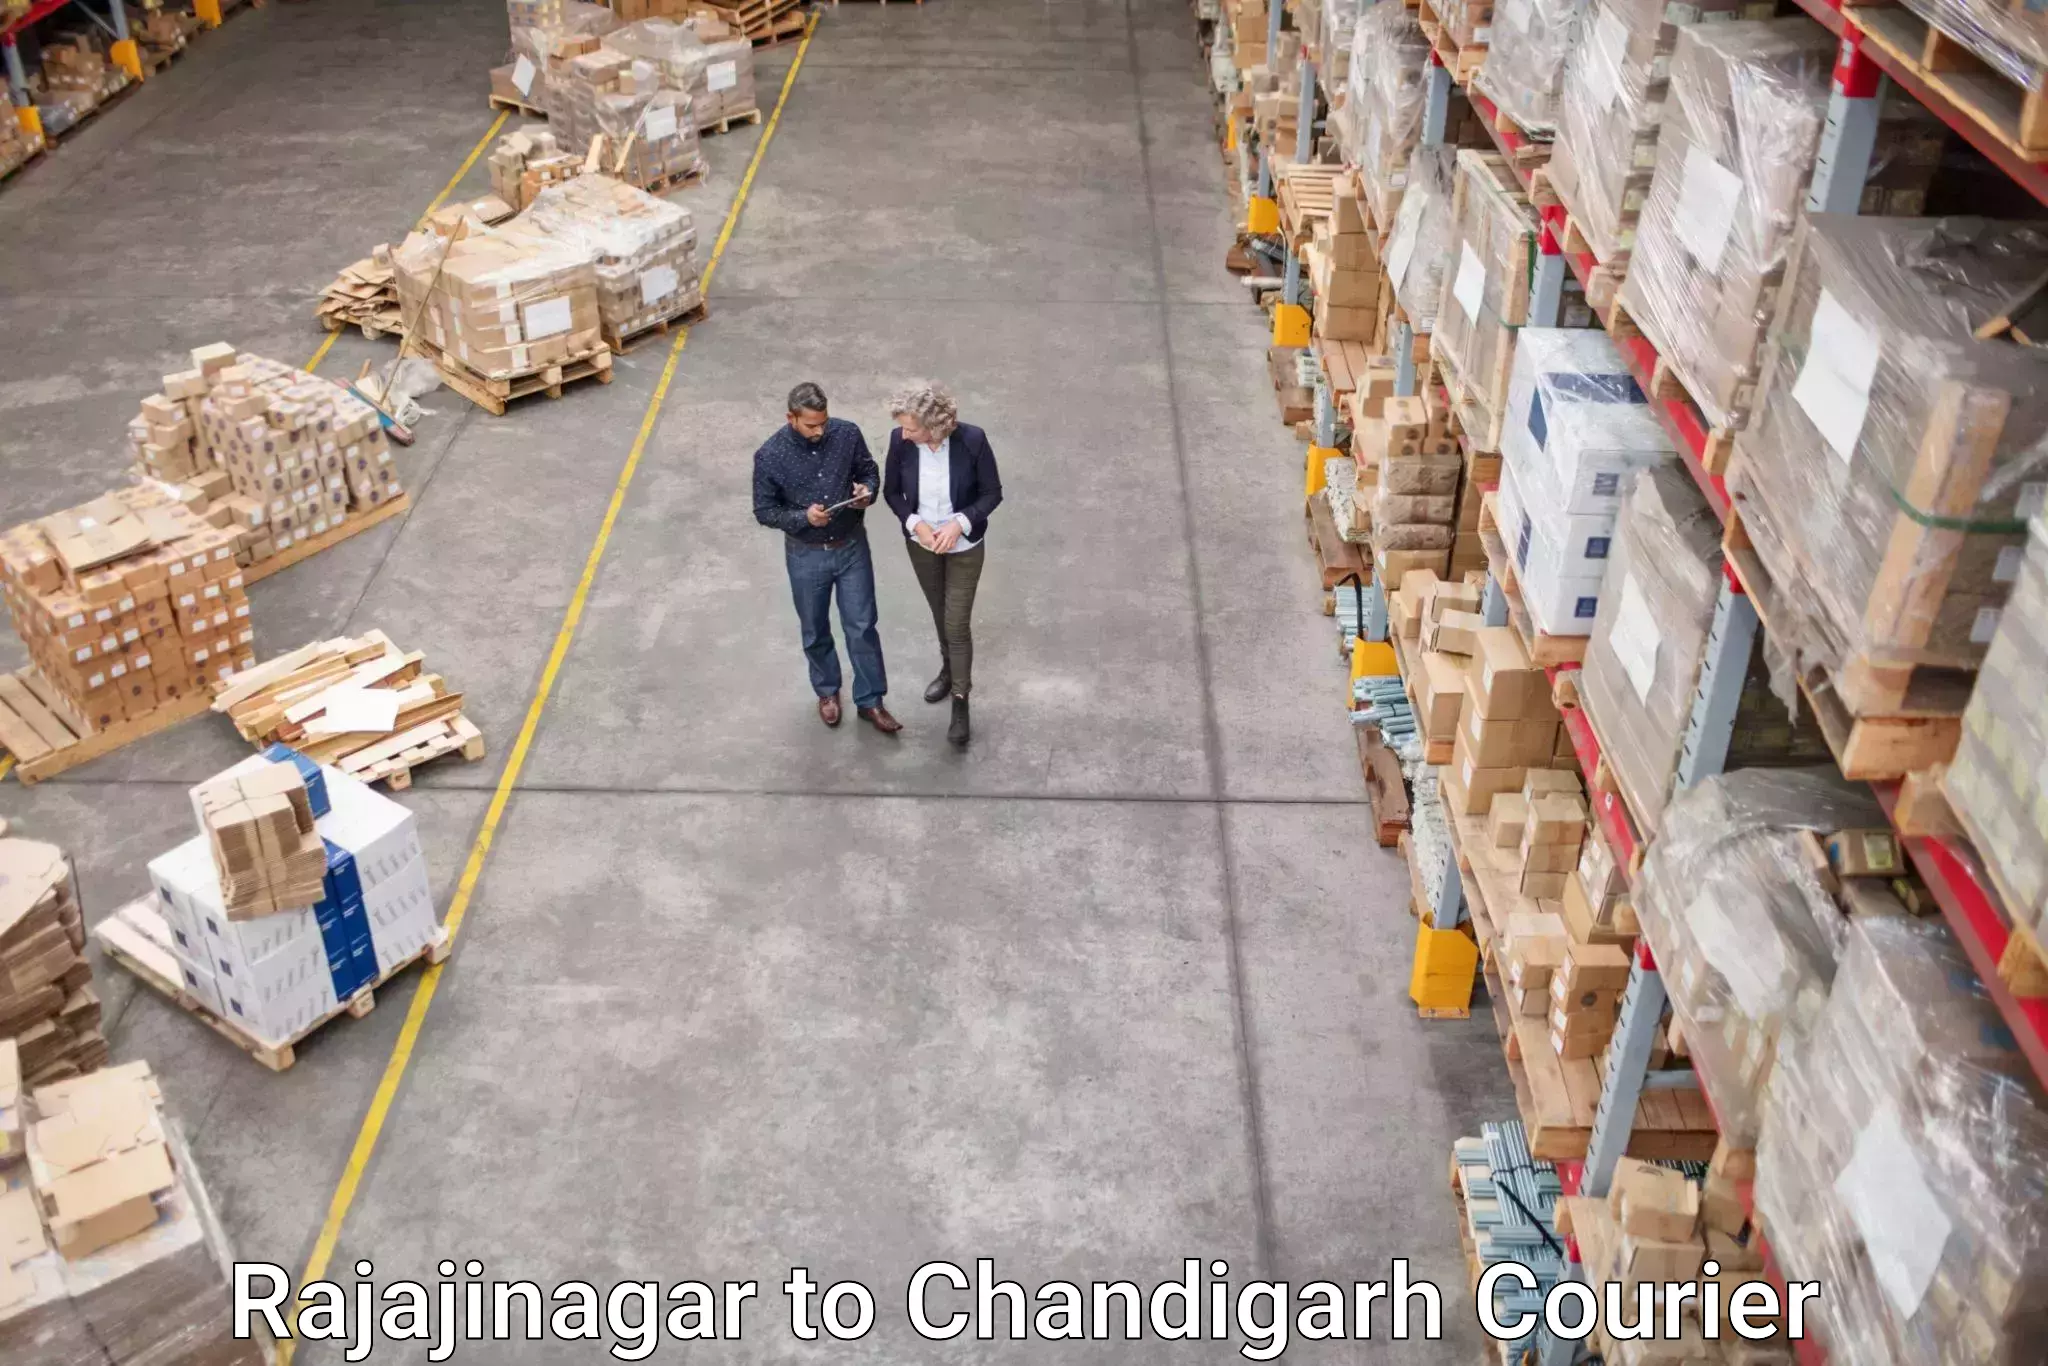 Subscription-based courier Rajajinagar to Chandigarh